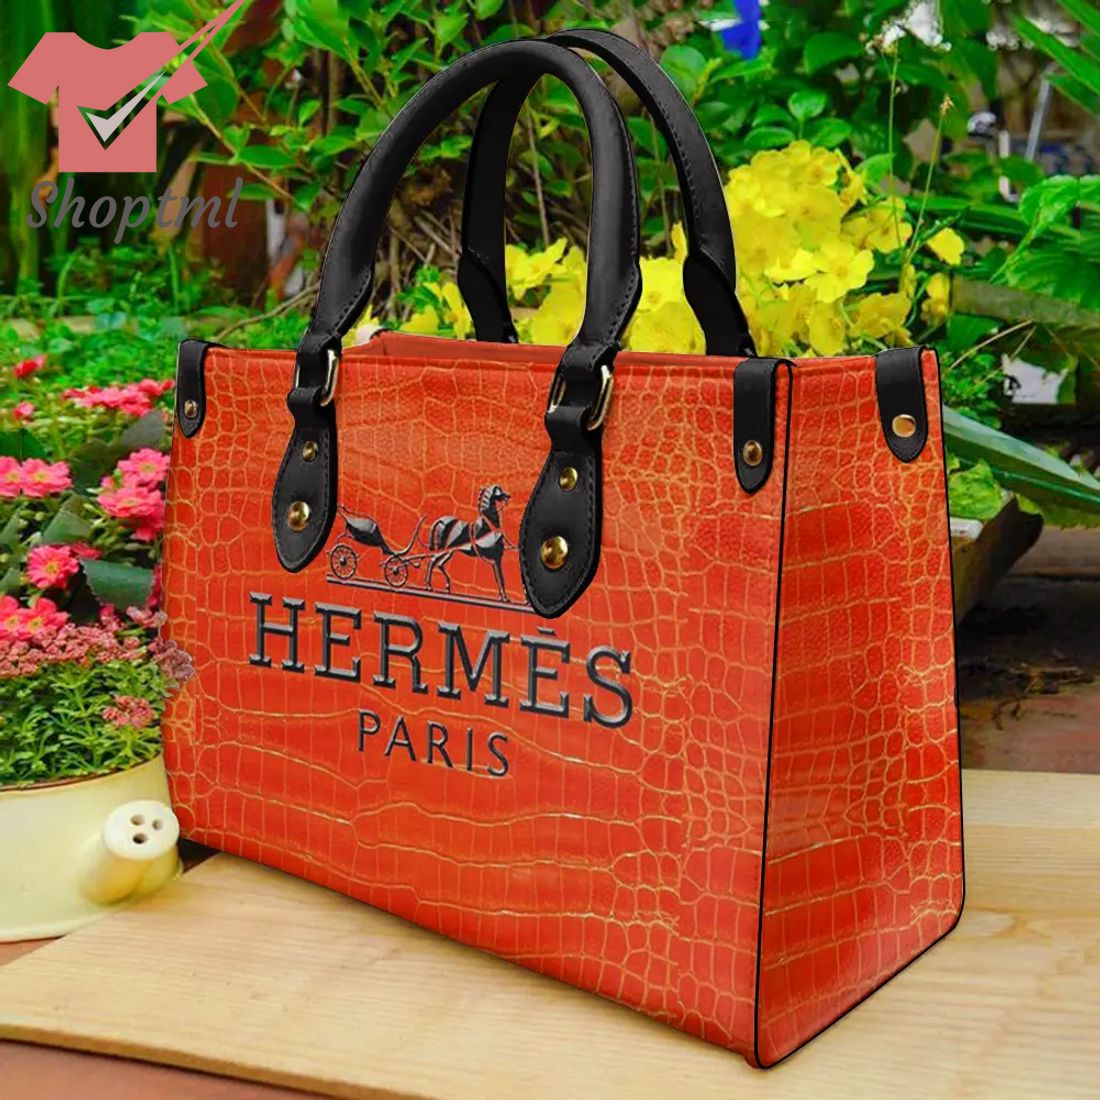 Hermes Paris Birkin Super Luxury Leather Handbag